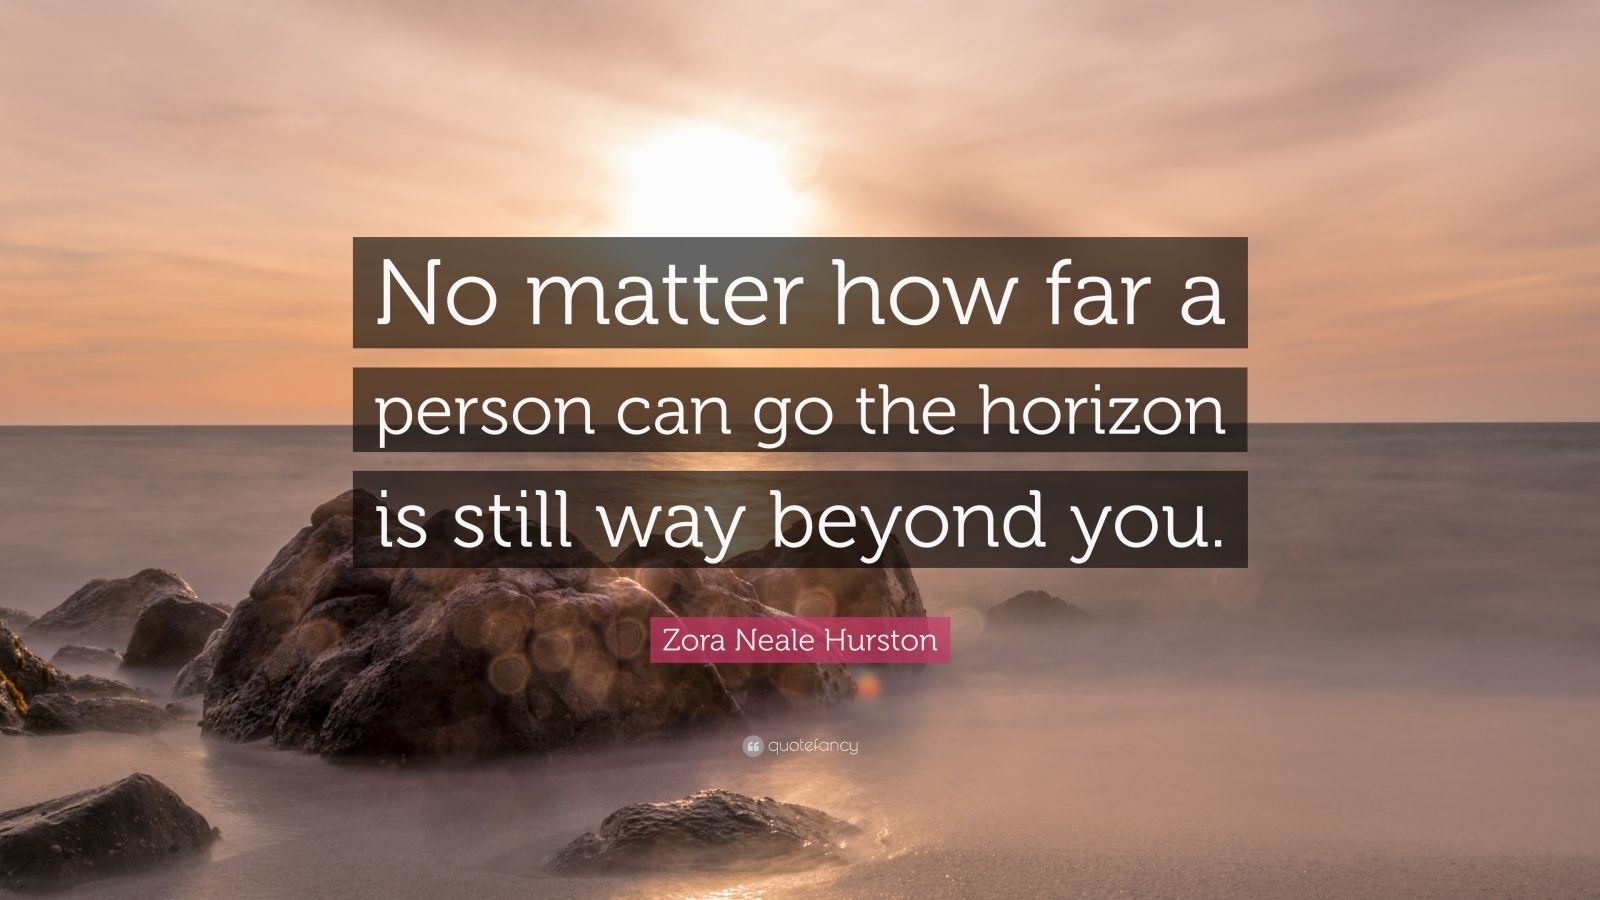 Zora Neale Hurston Quote: “No matter how far a person can go the ...